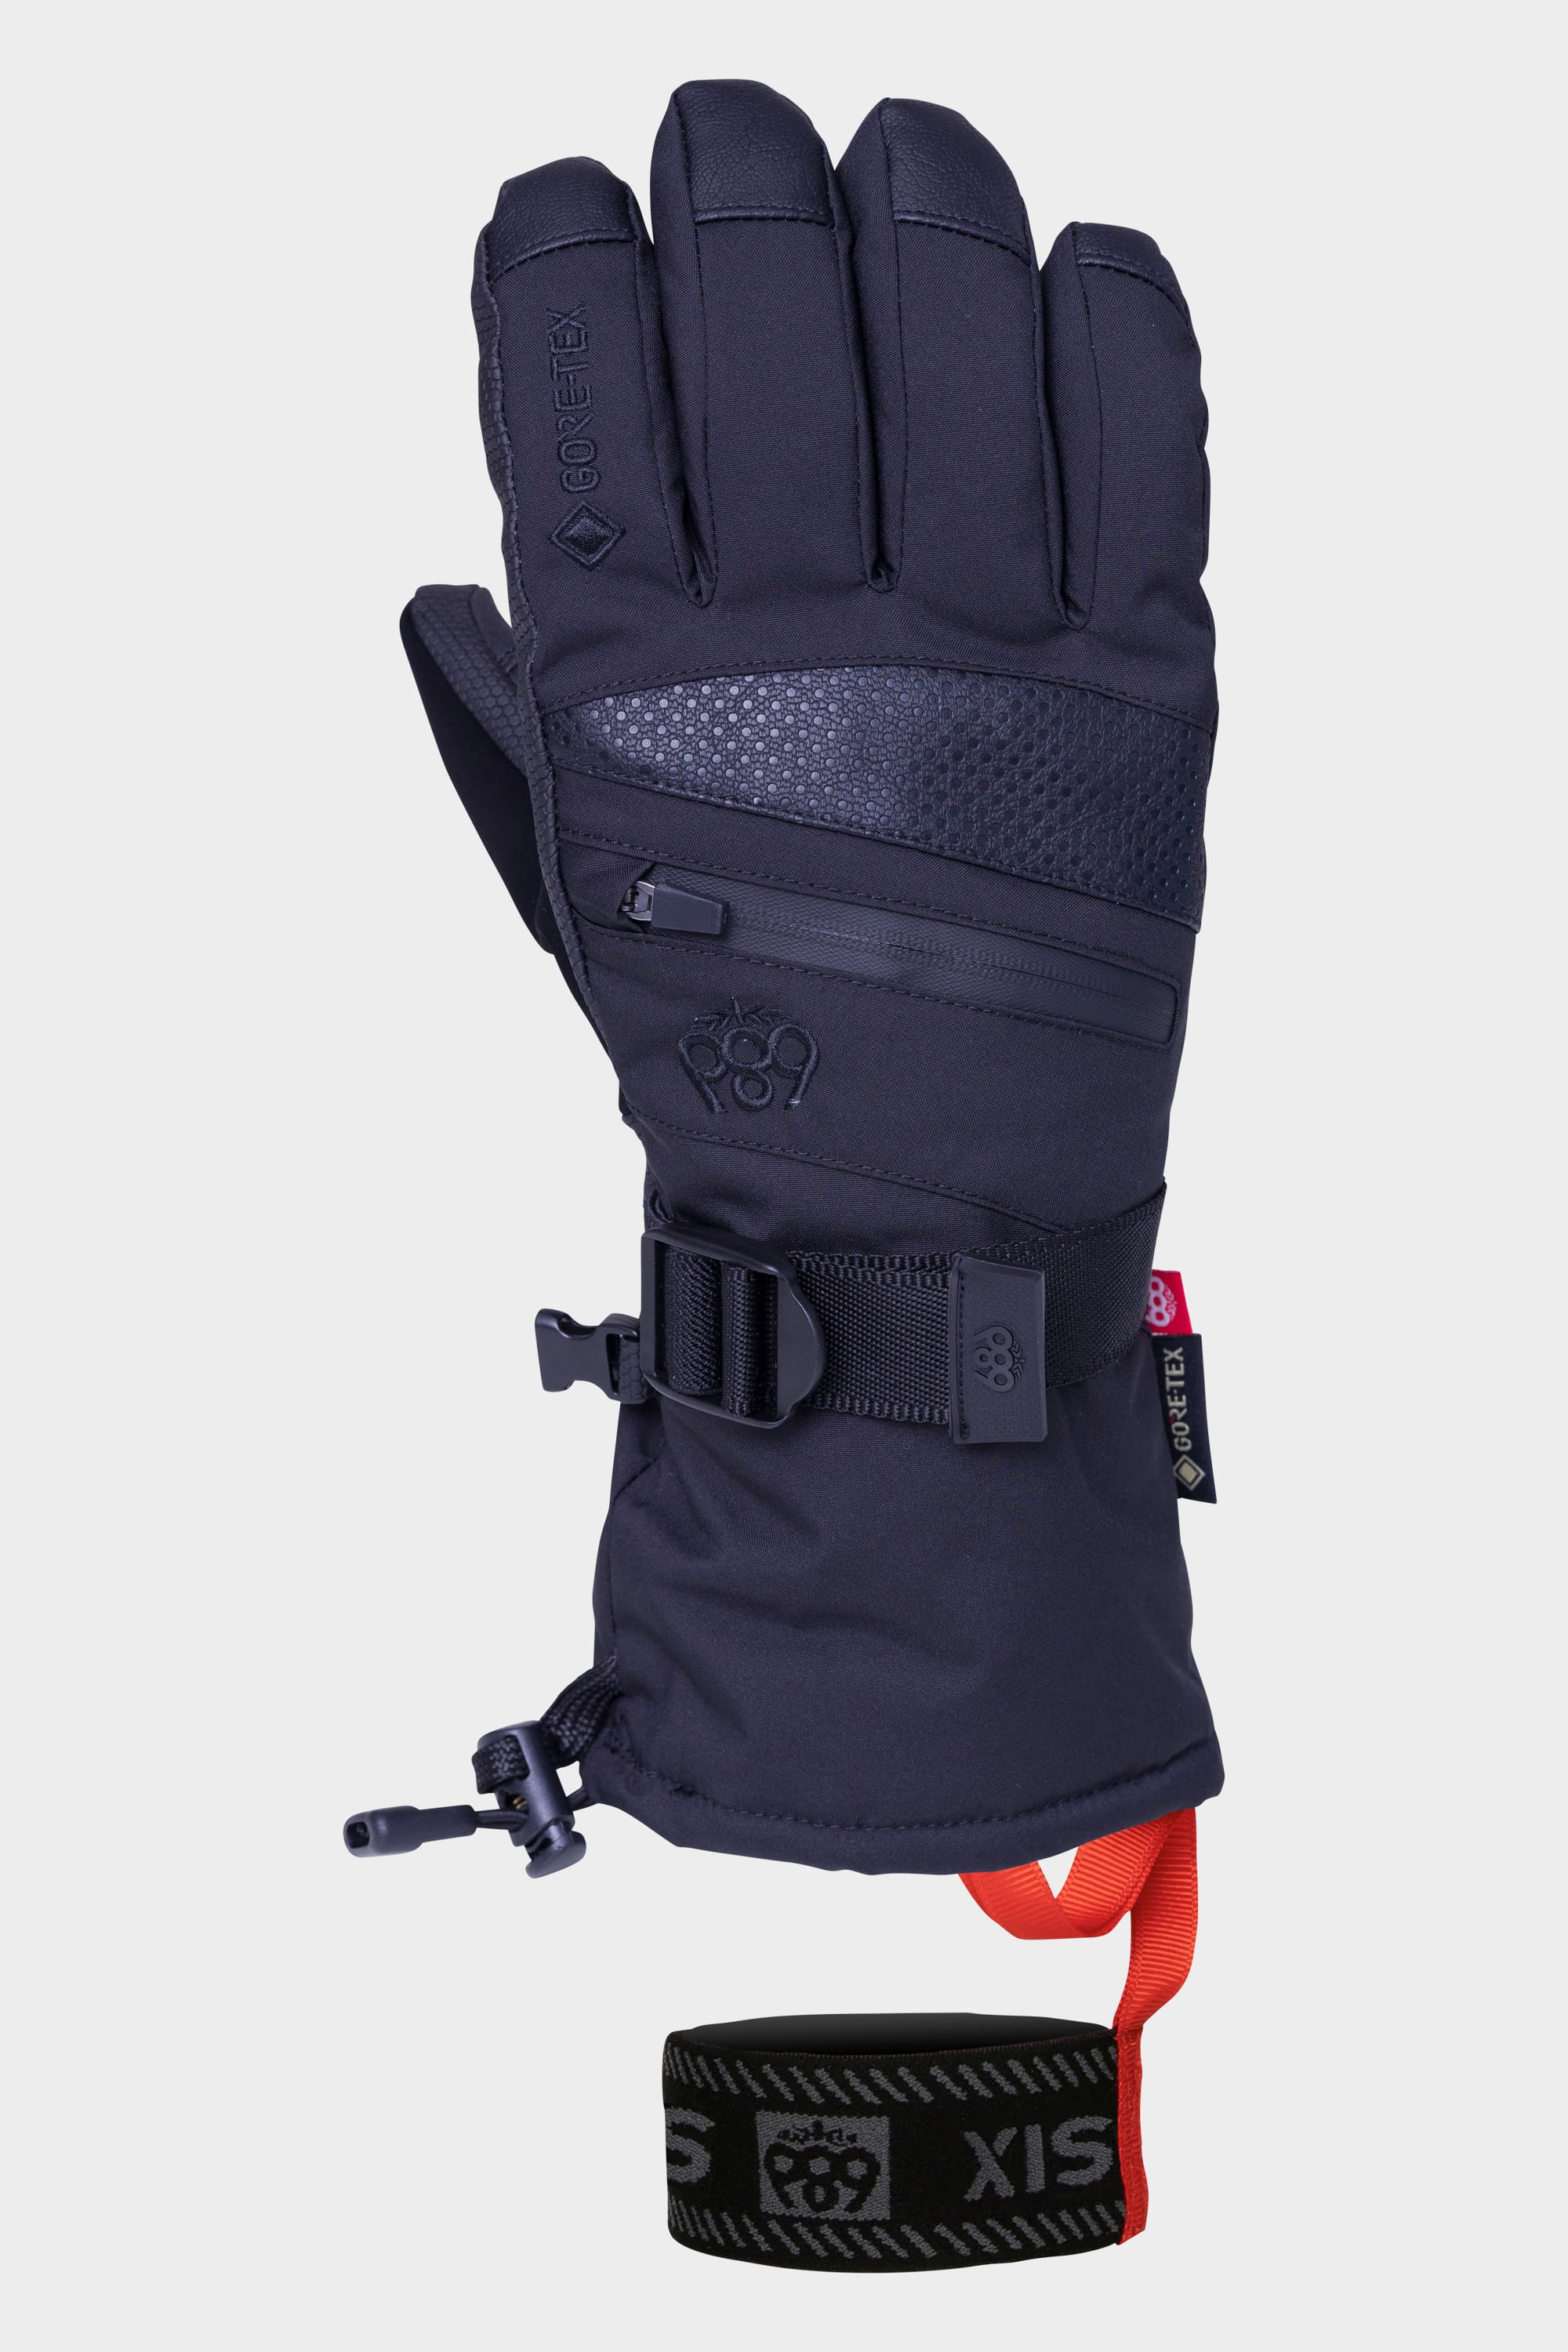 686 GORE-TEX Linear Glove - Women's Dusty Mauve S